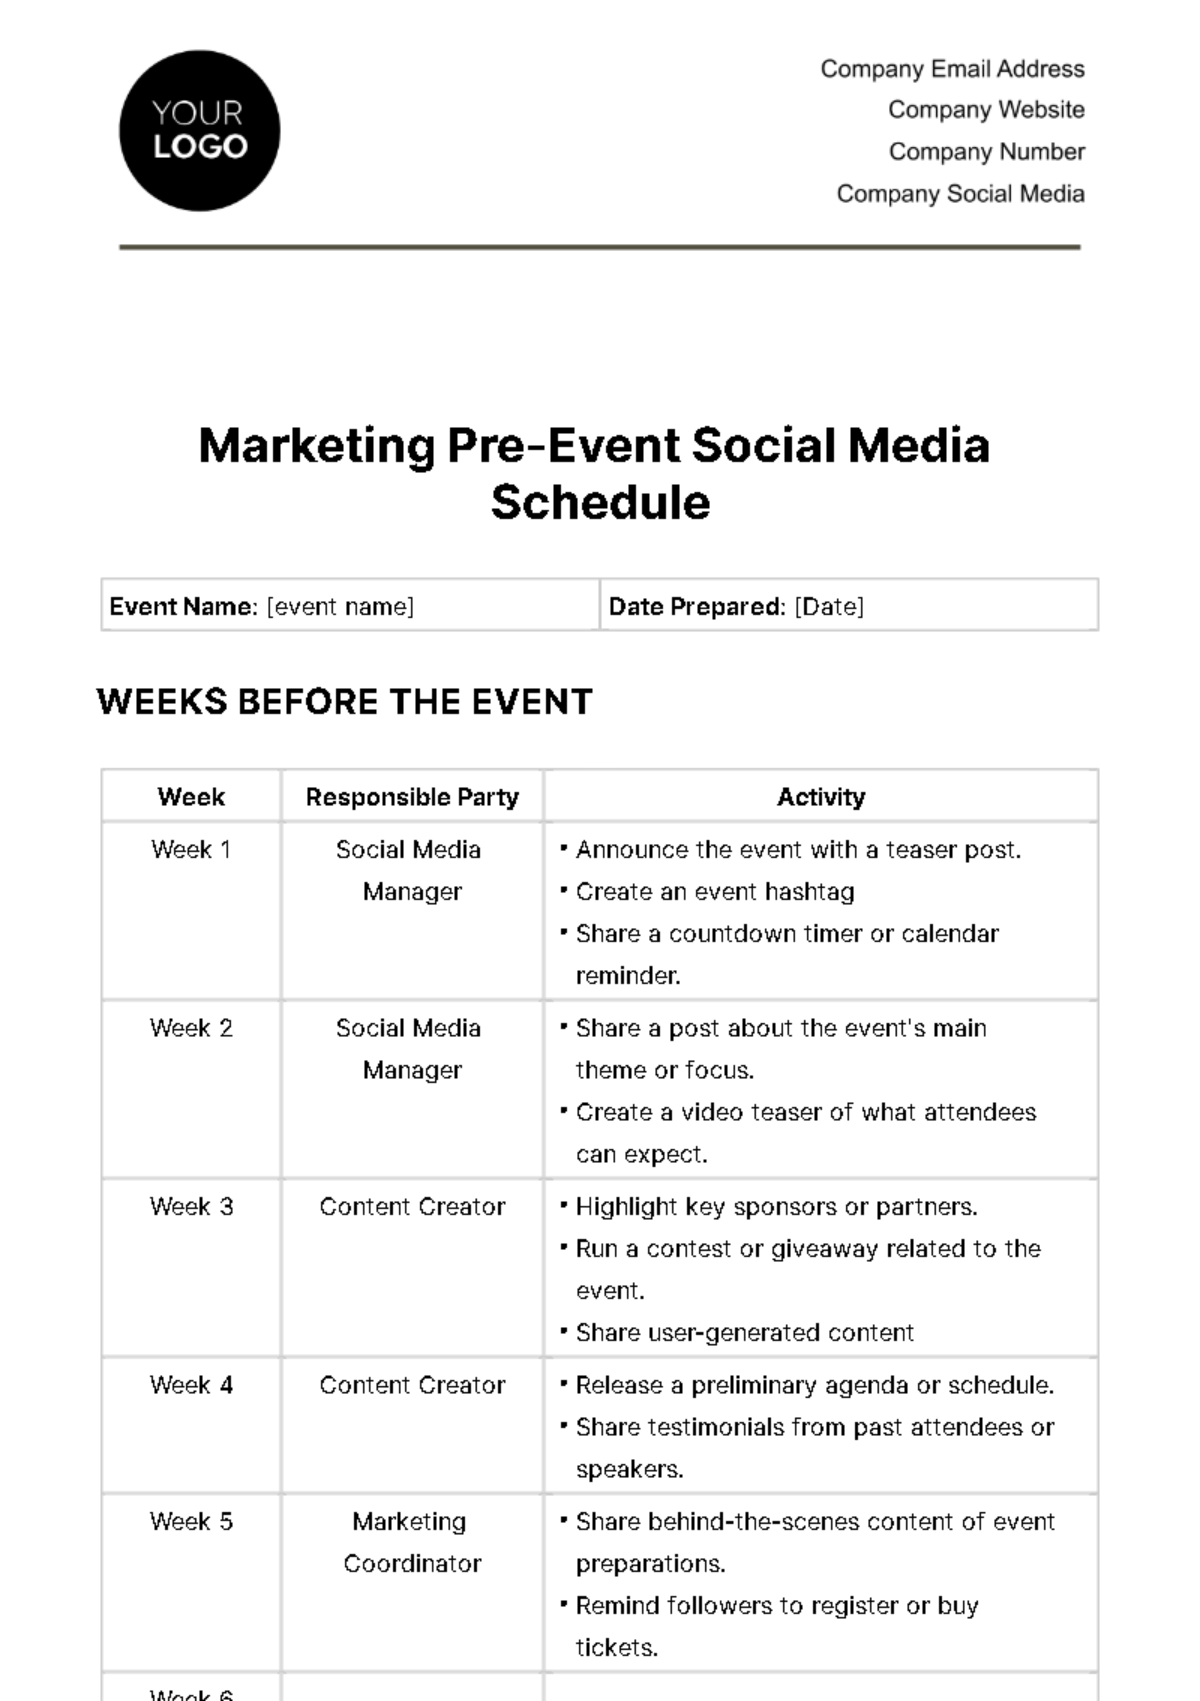 Marketing Pre-Event Social Media Schedule Template